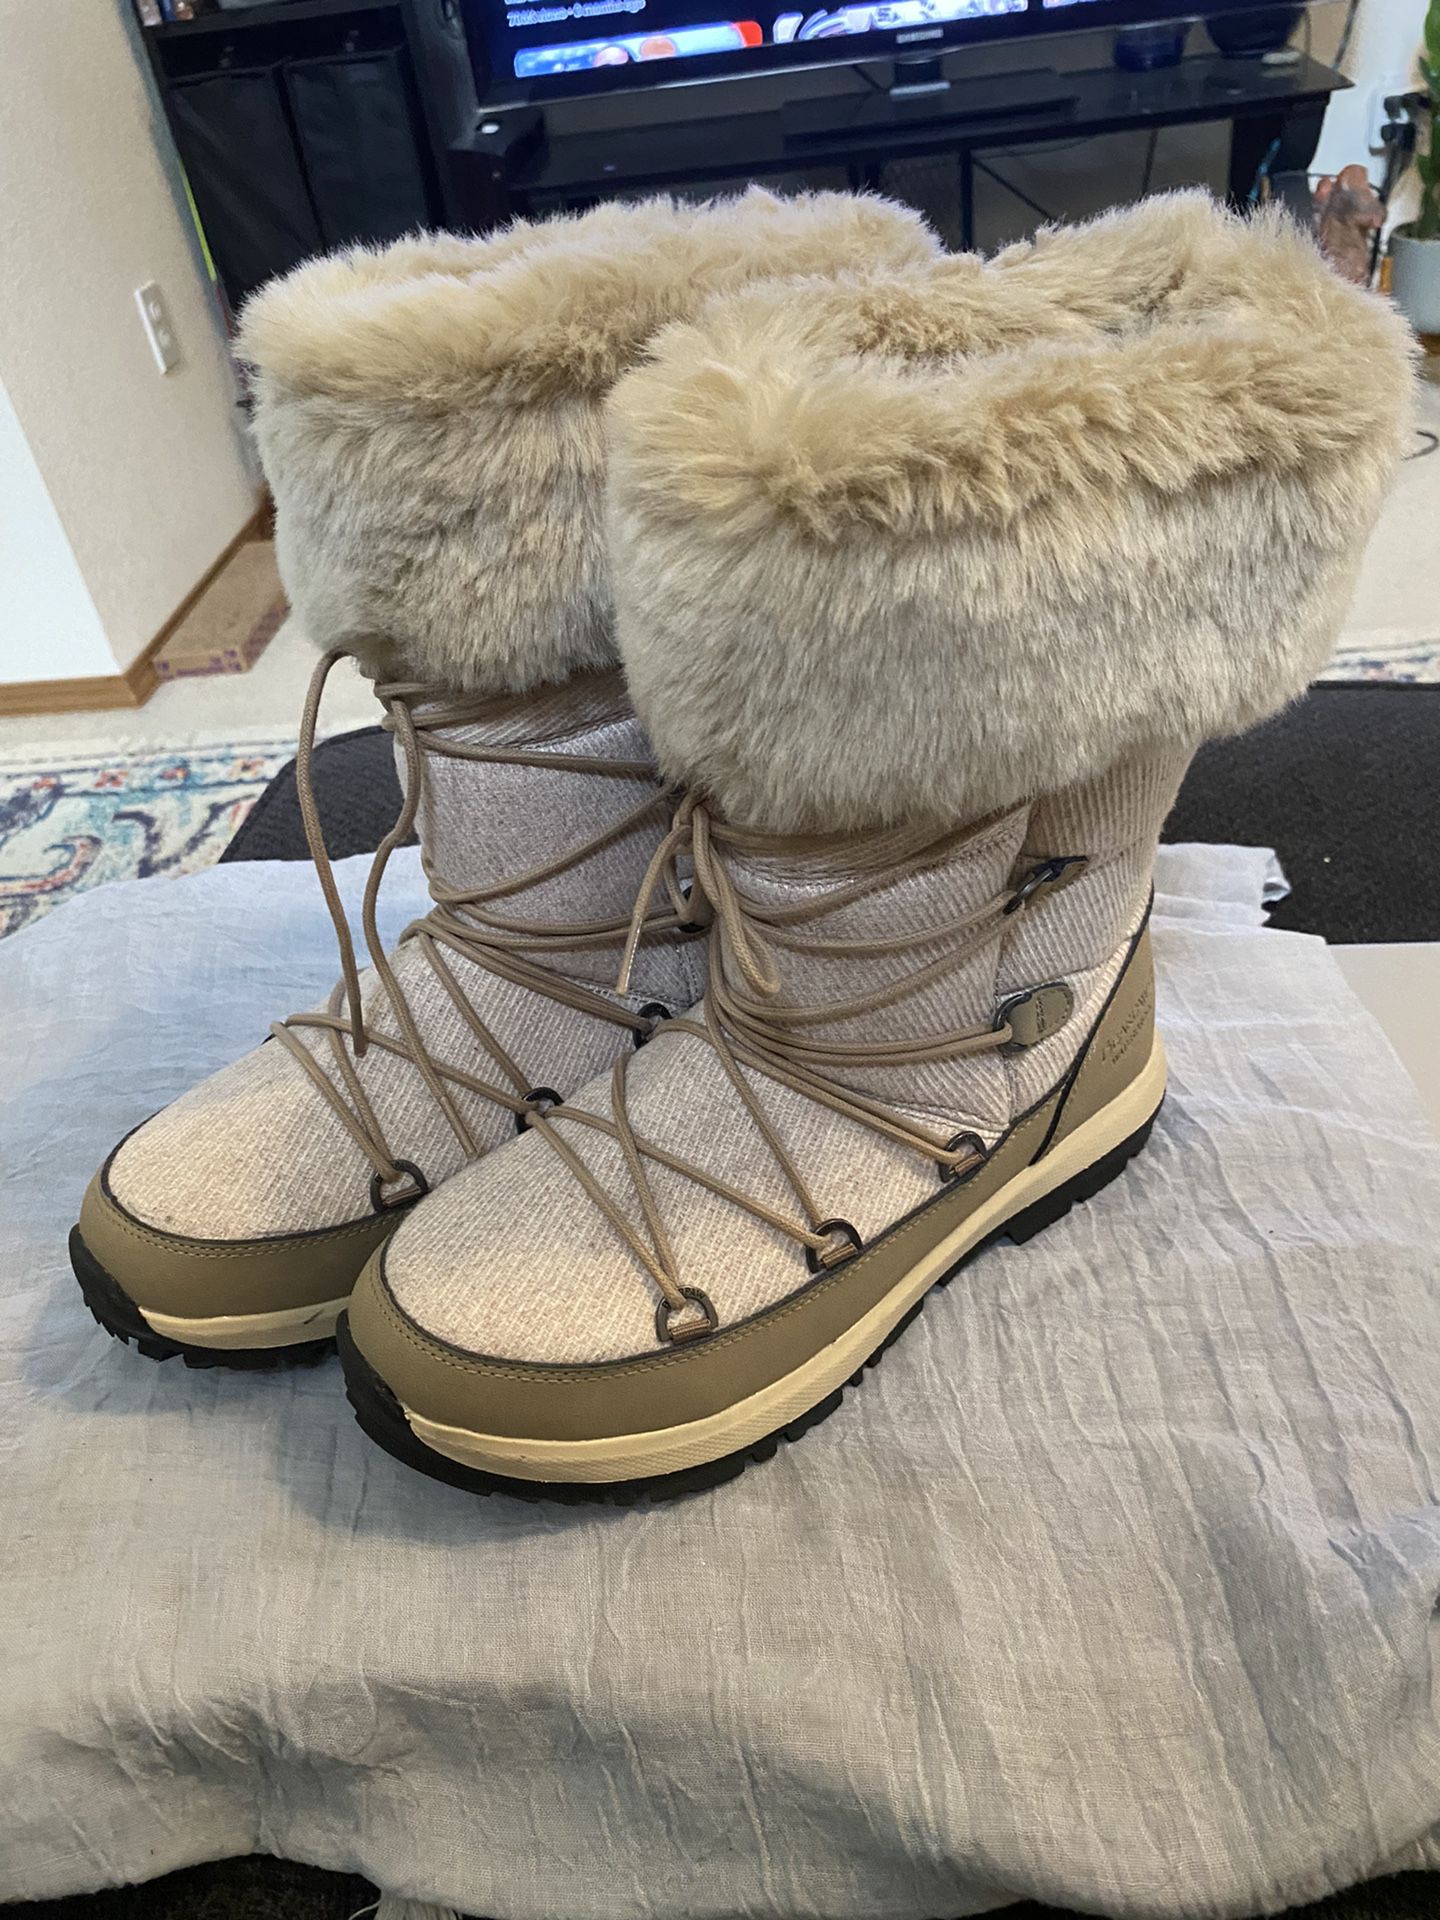 BearPaw Waterproof Boots Beige Mid-Calf Lace Up w/ Fur Trim Size 9 ***NEW***